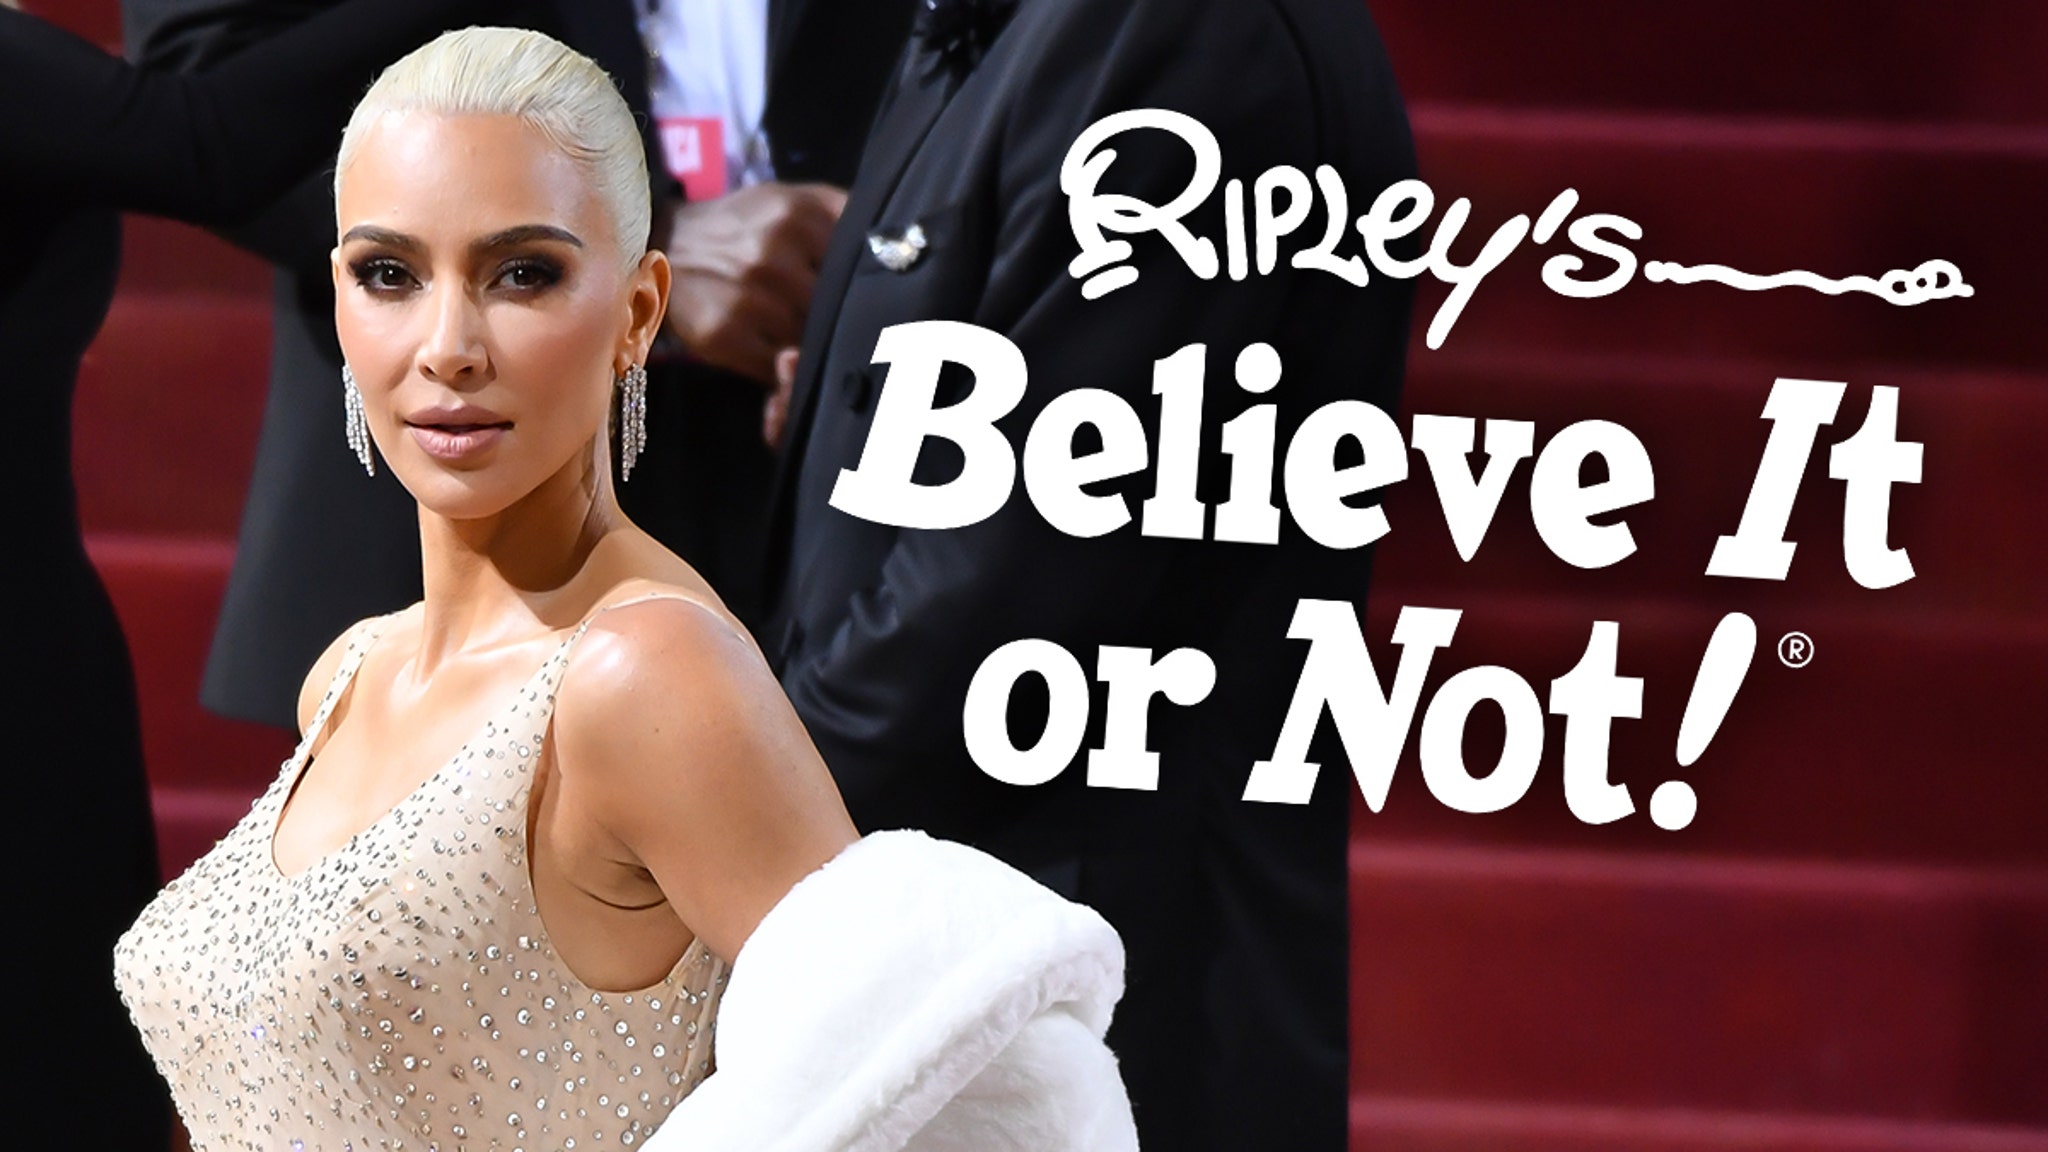 Kim Kardashian 'did not damage' Marilyn Monroe's dress, according to  Ripley's